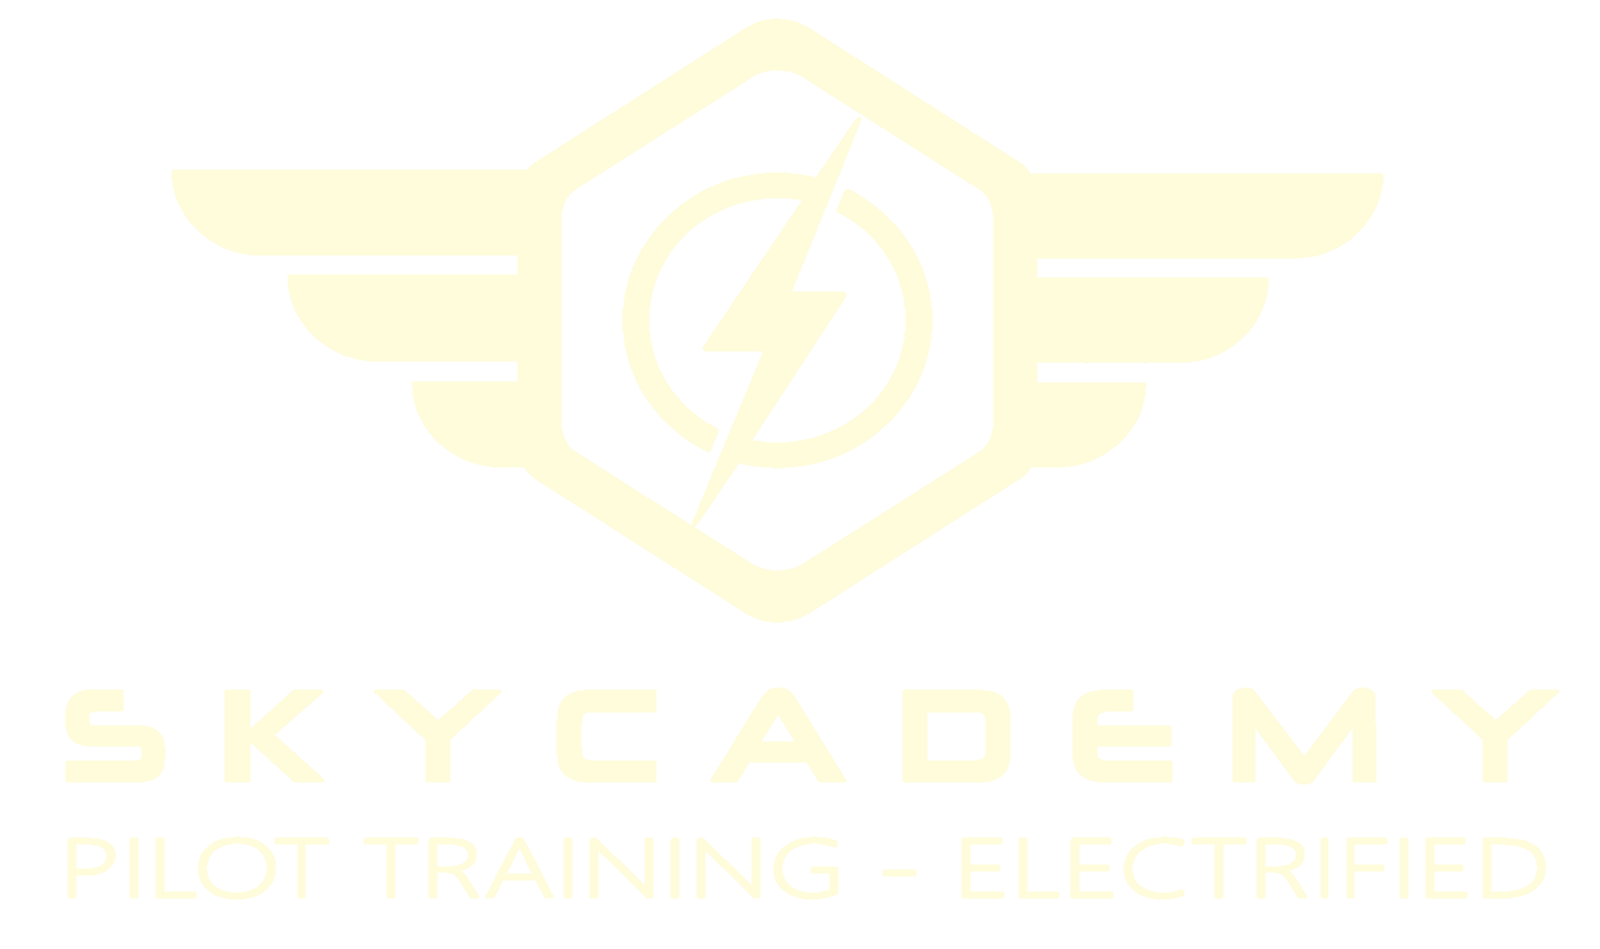 Pilot training logo